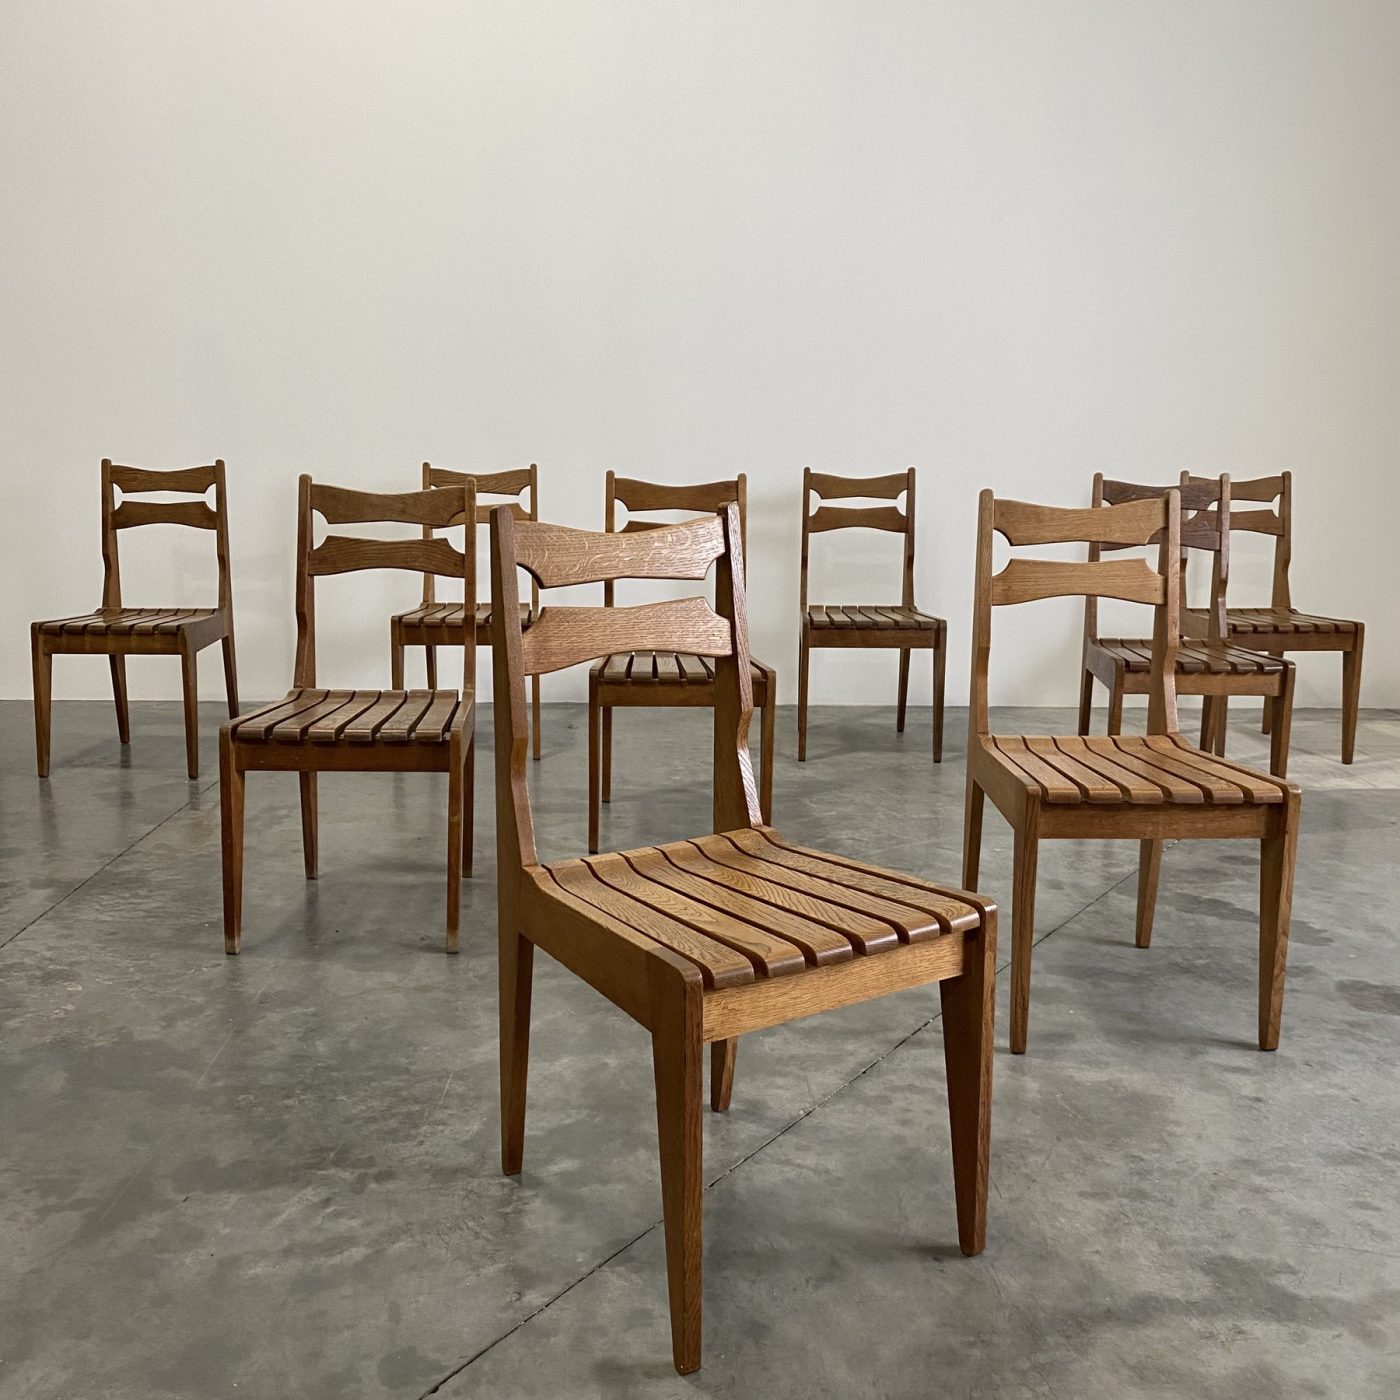 objet-vagabond-reconstruction-chairs0000